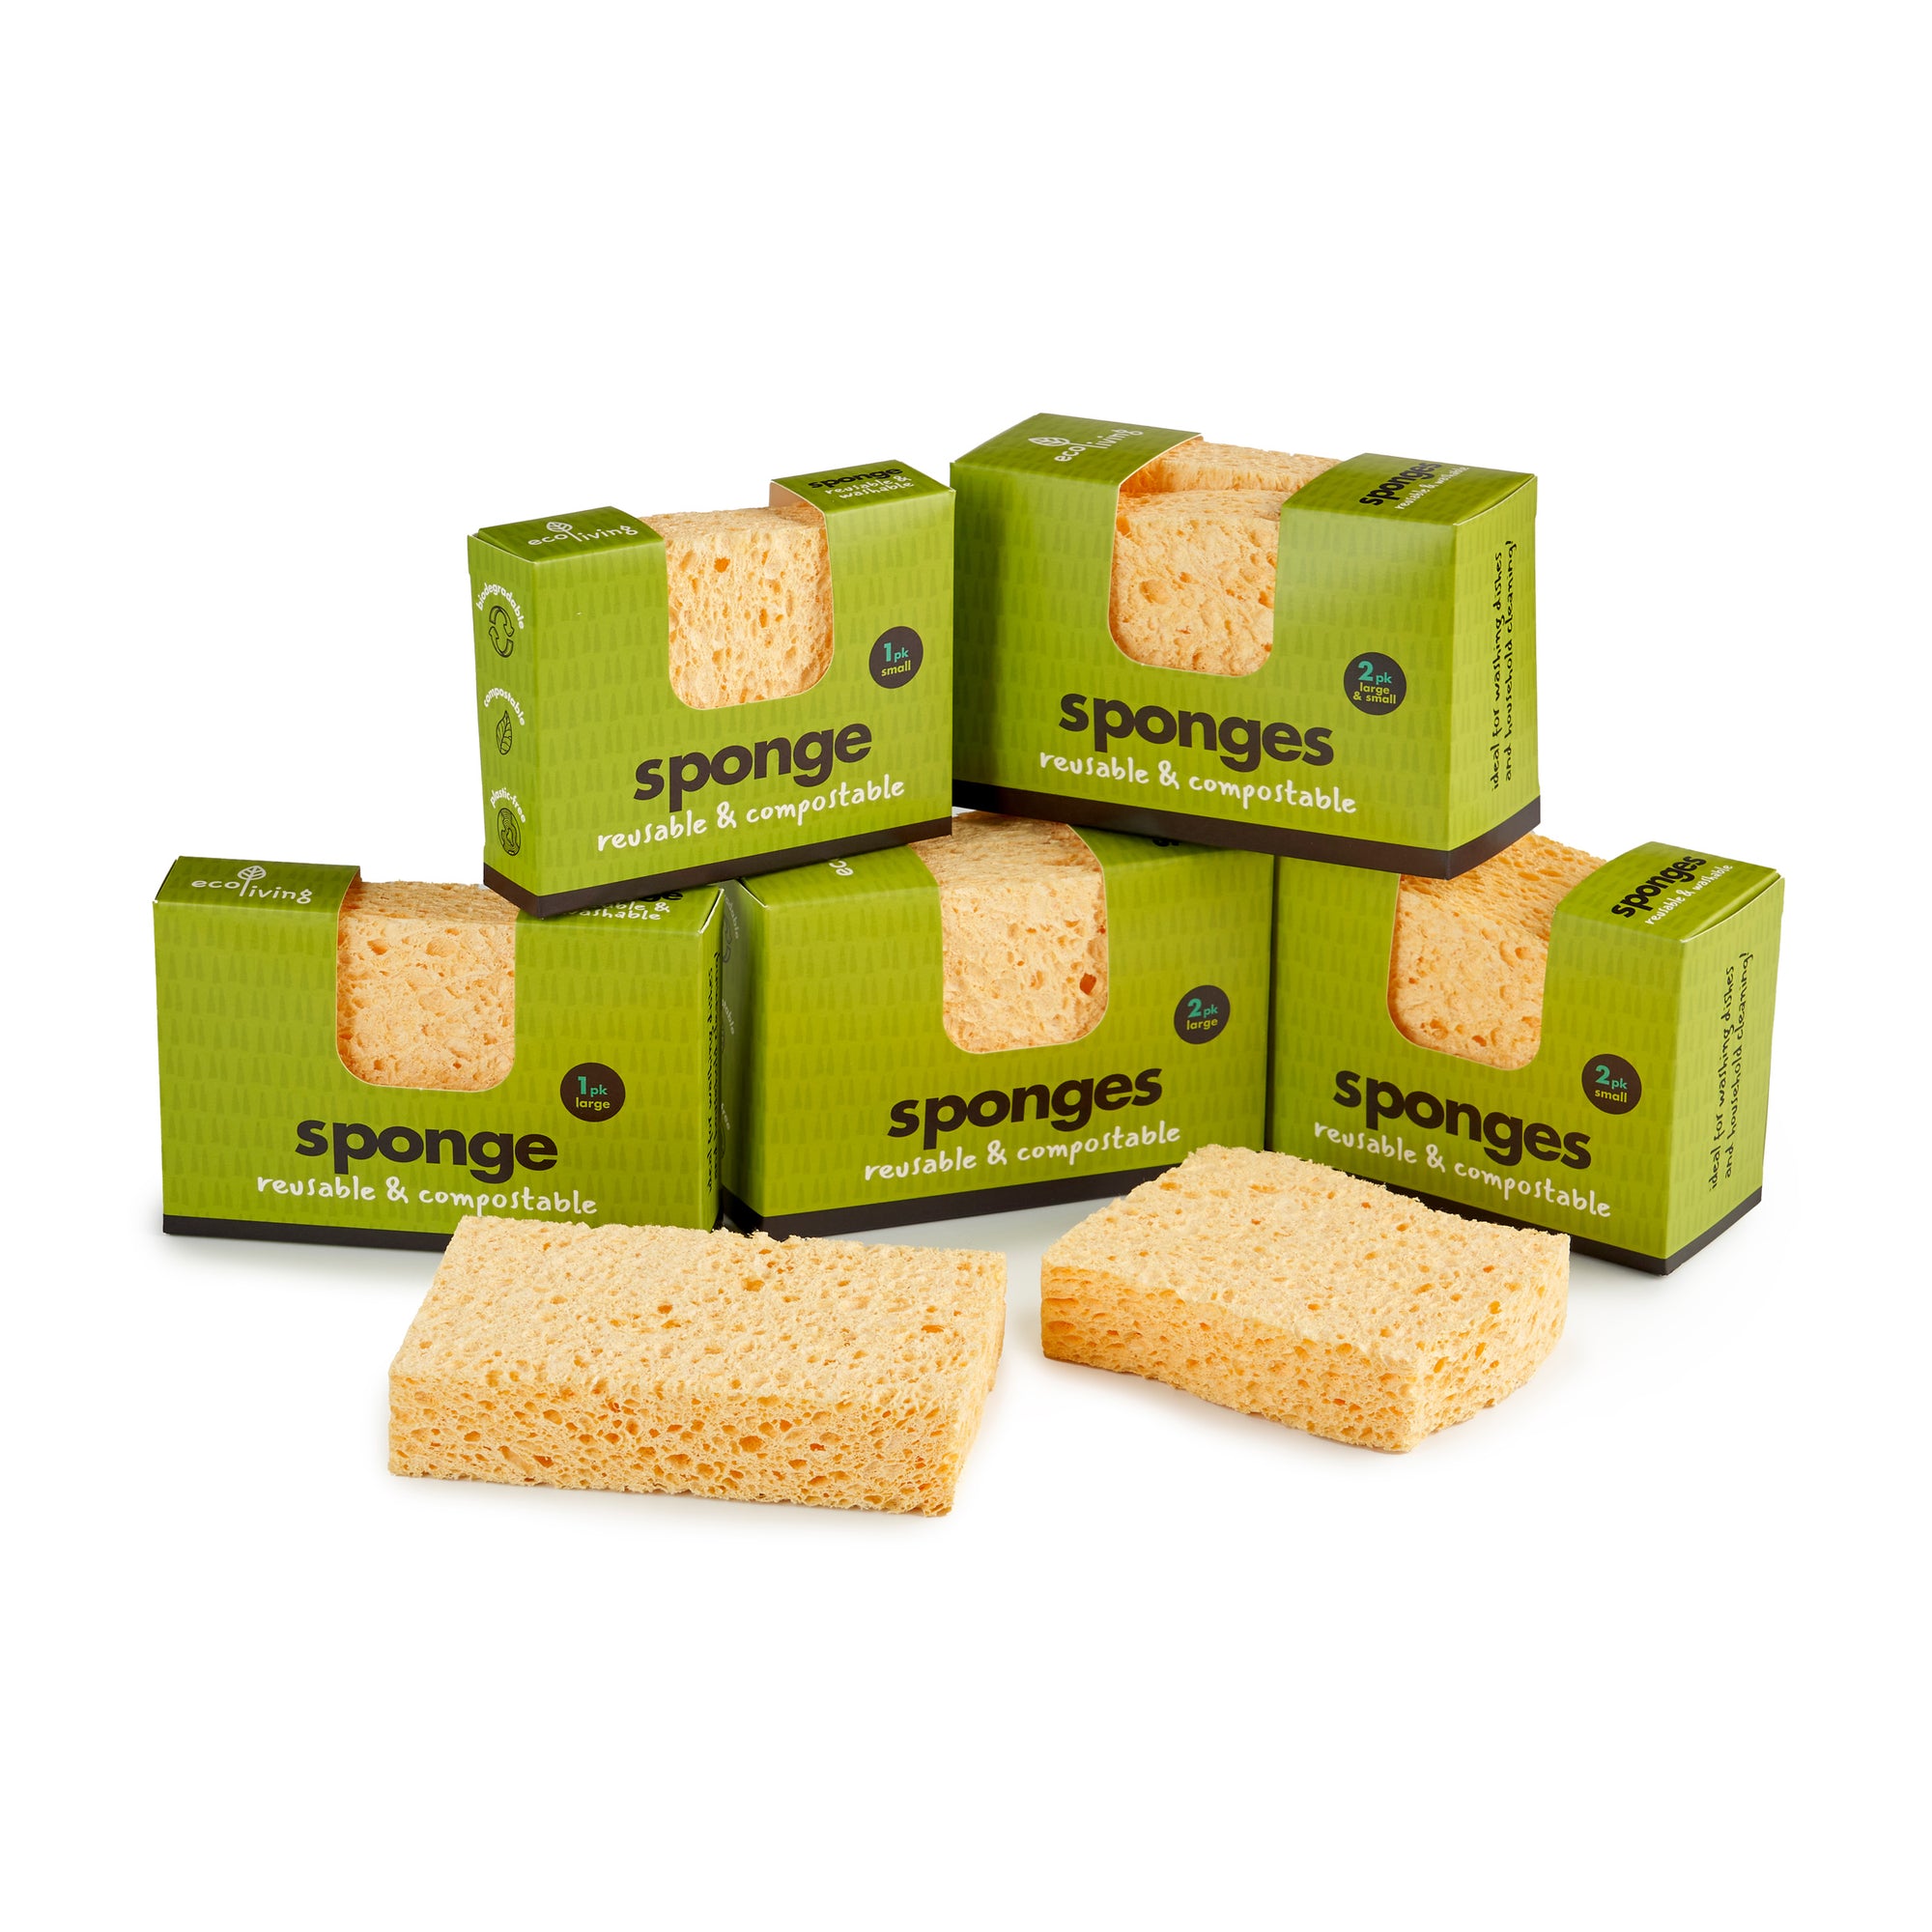 Compostable Cleaning Sponge - Smaller Wavy Sponge x1 | Cleaning Sponge - The Naughty Shrew